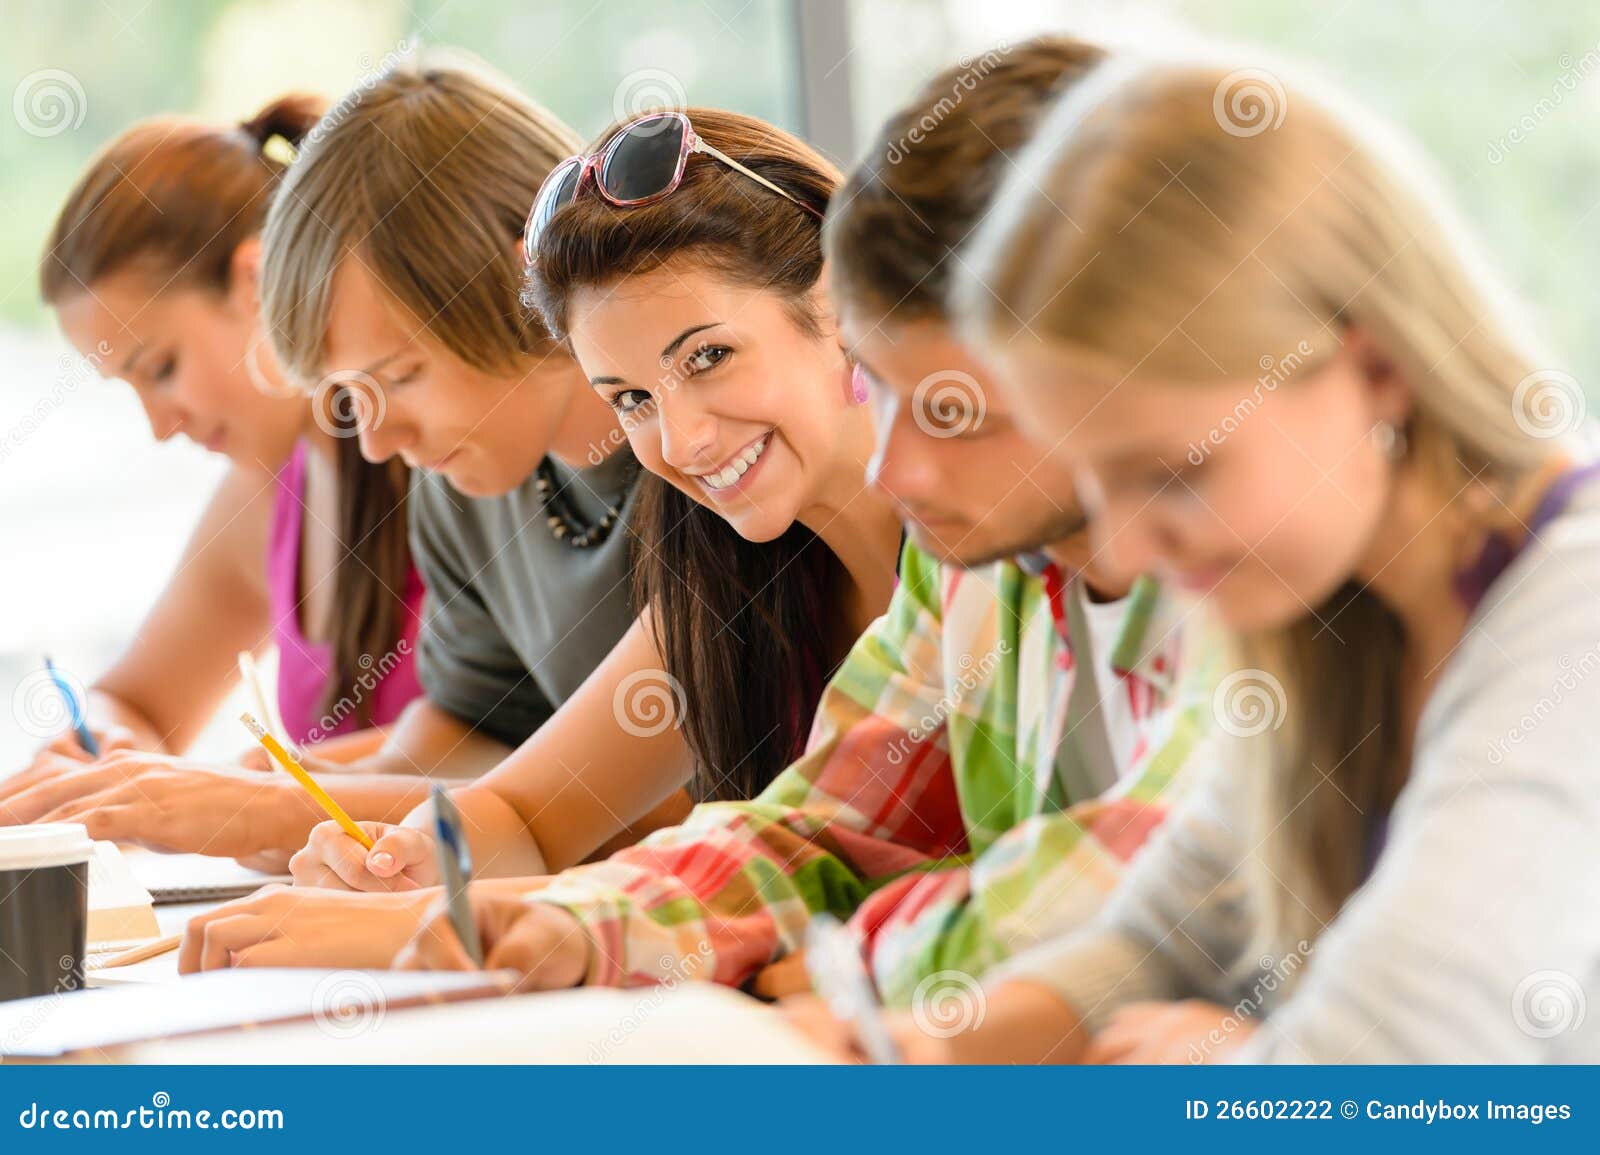 students writing at high-school exam teens study